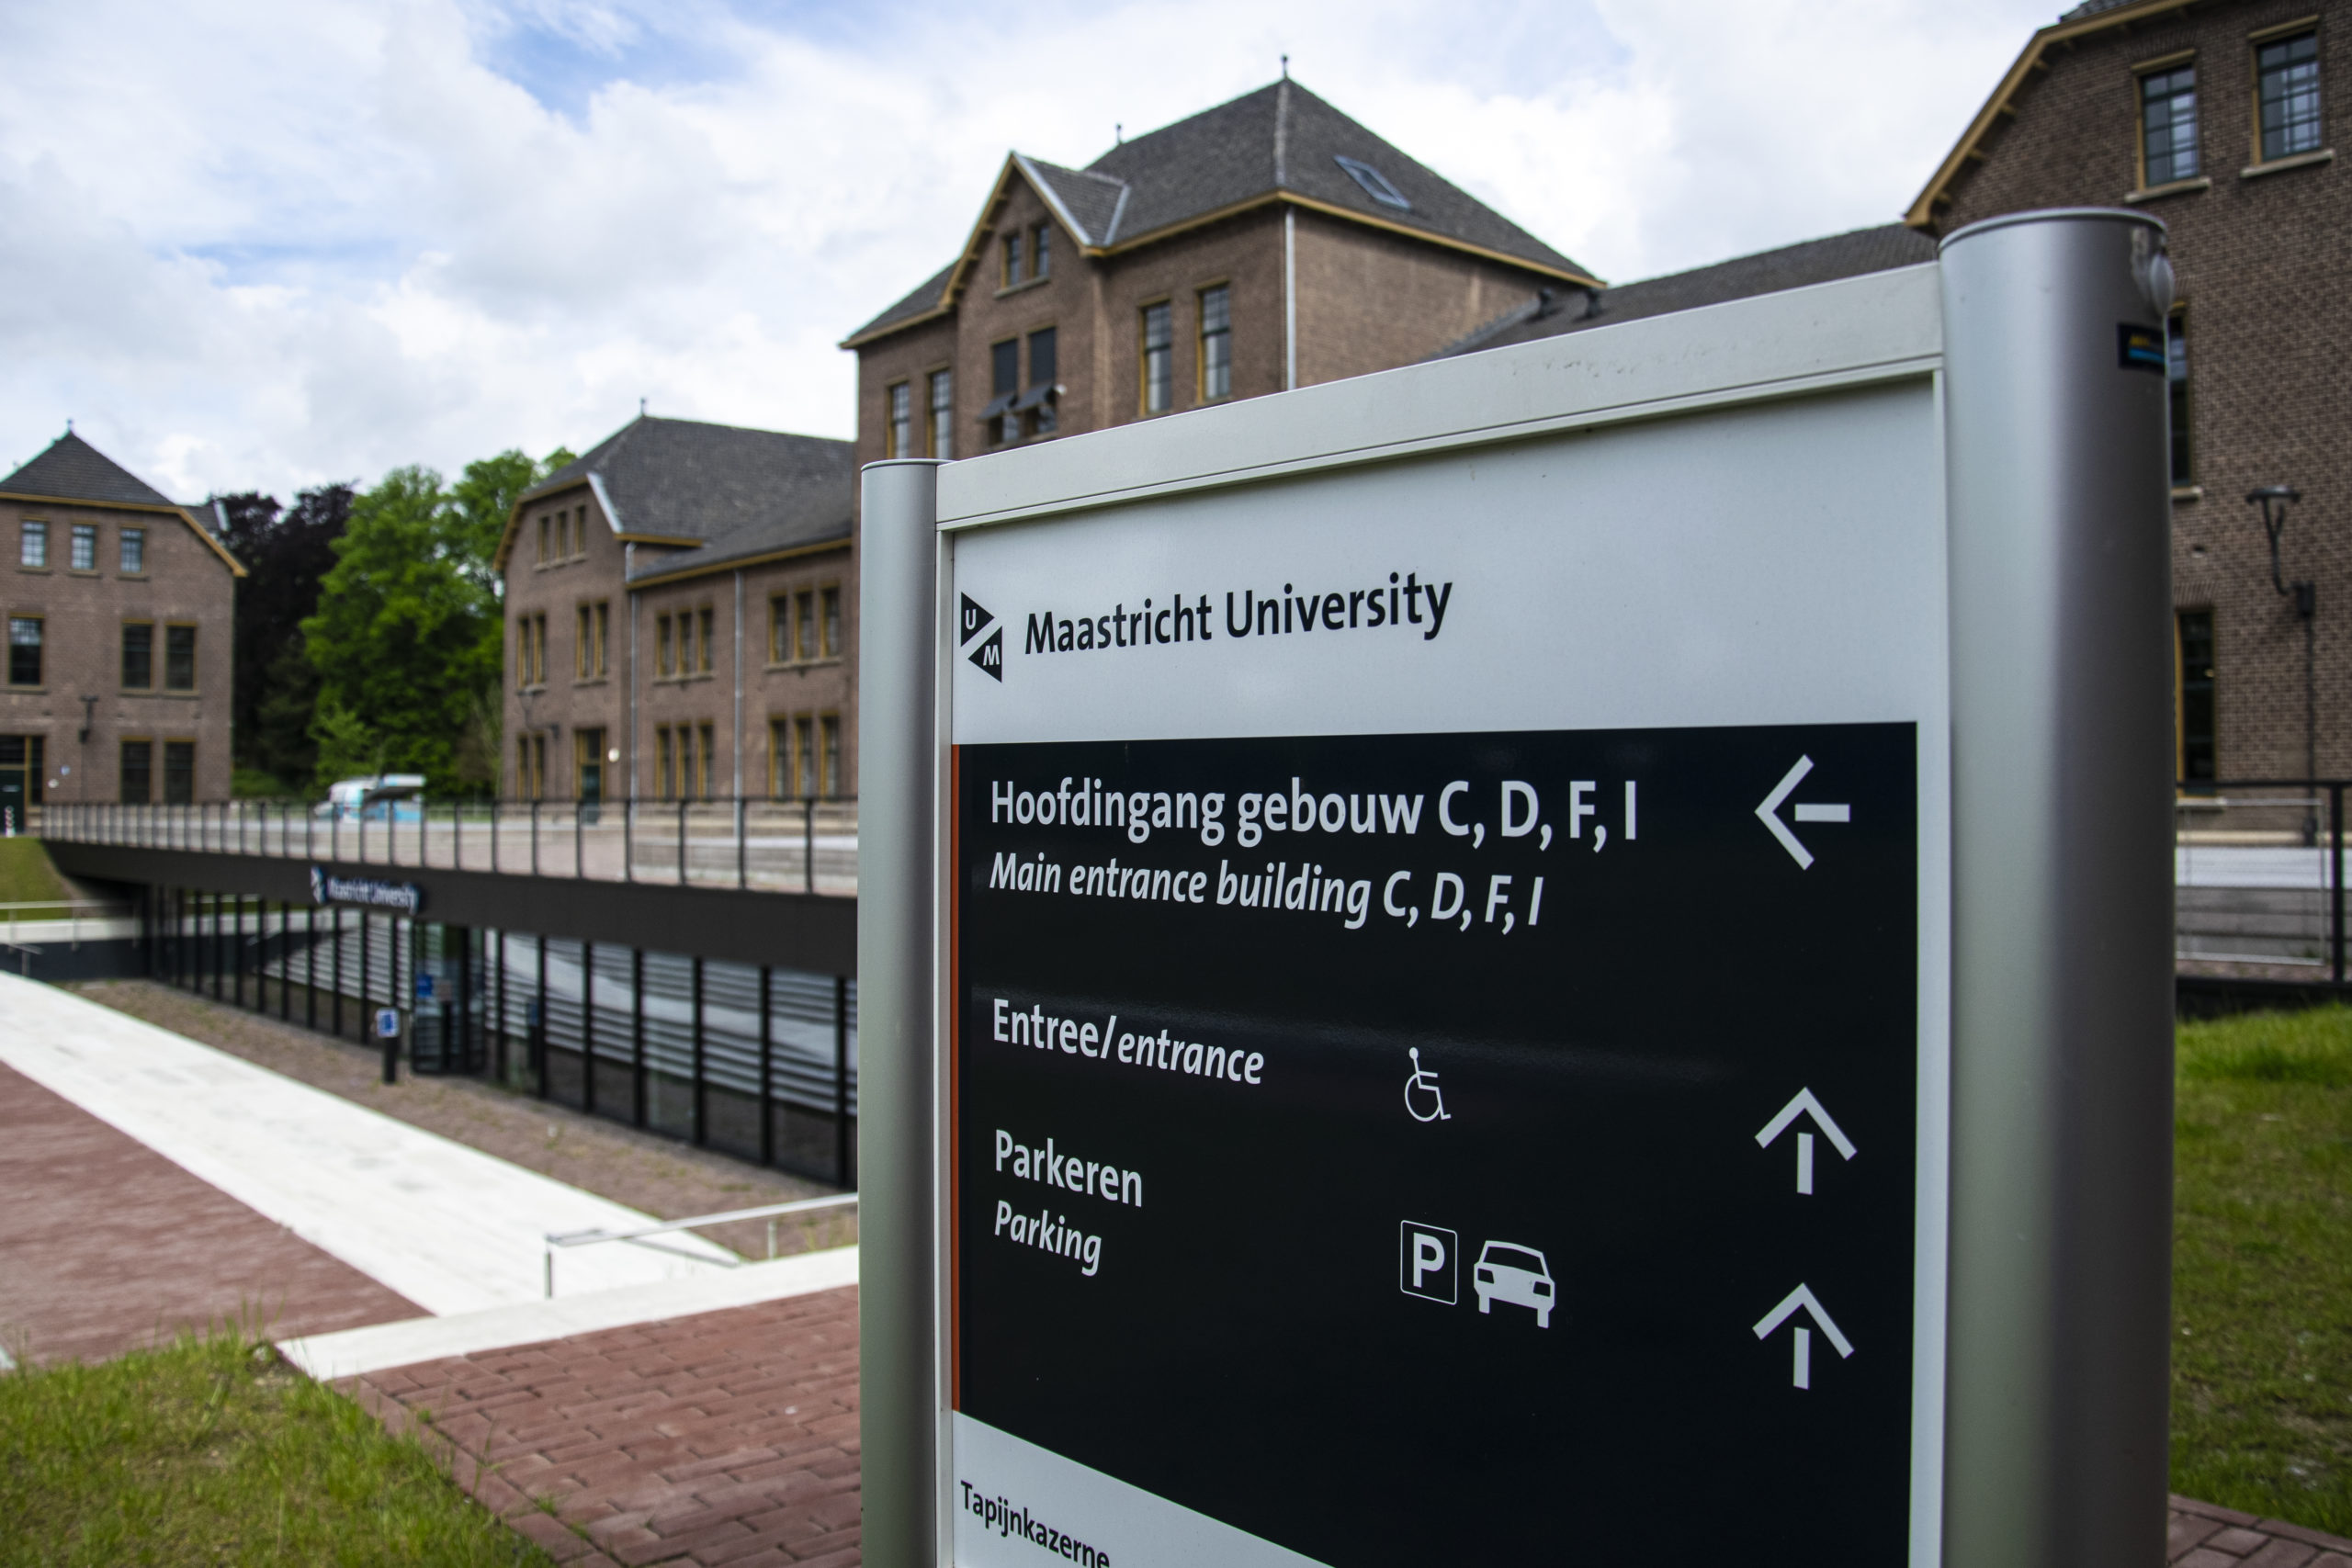 maastricht-university-tapijnkazerne-media-service-maastricht